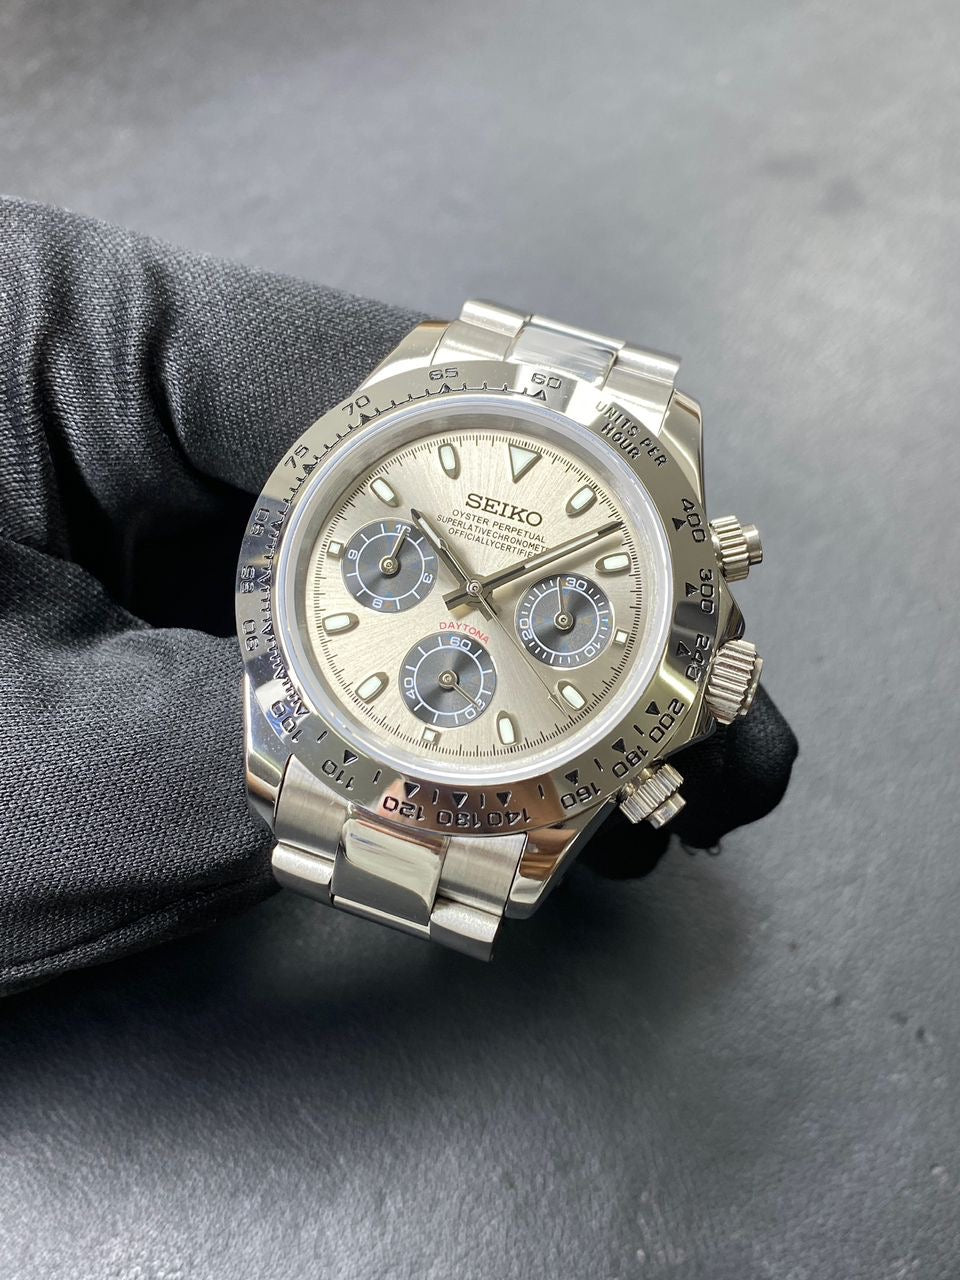 Seiko mod Daytona silver daytona VK63 chronograph watch